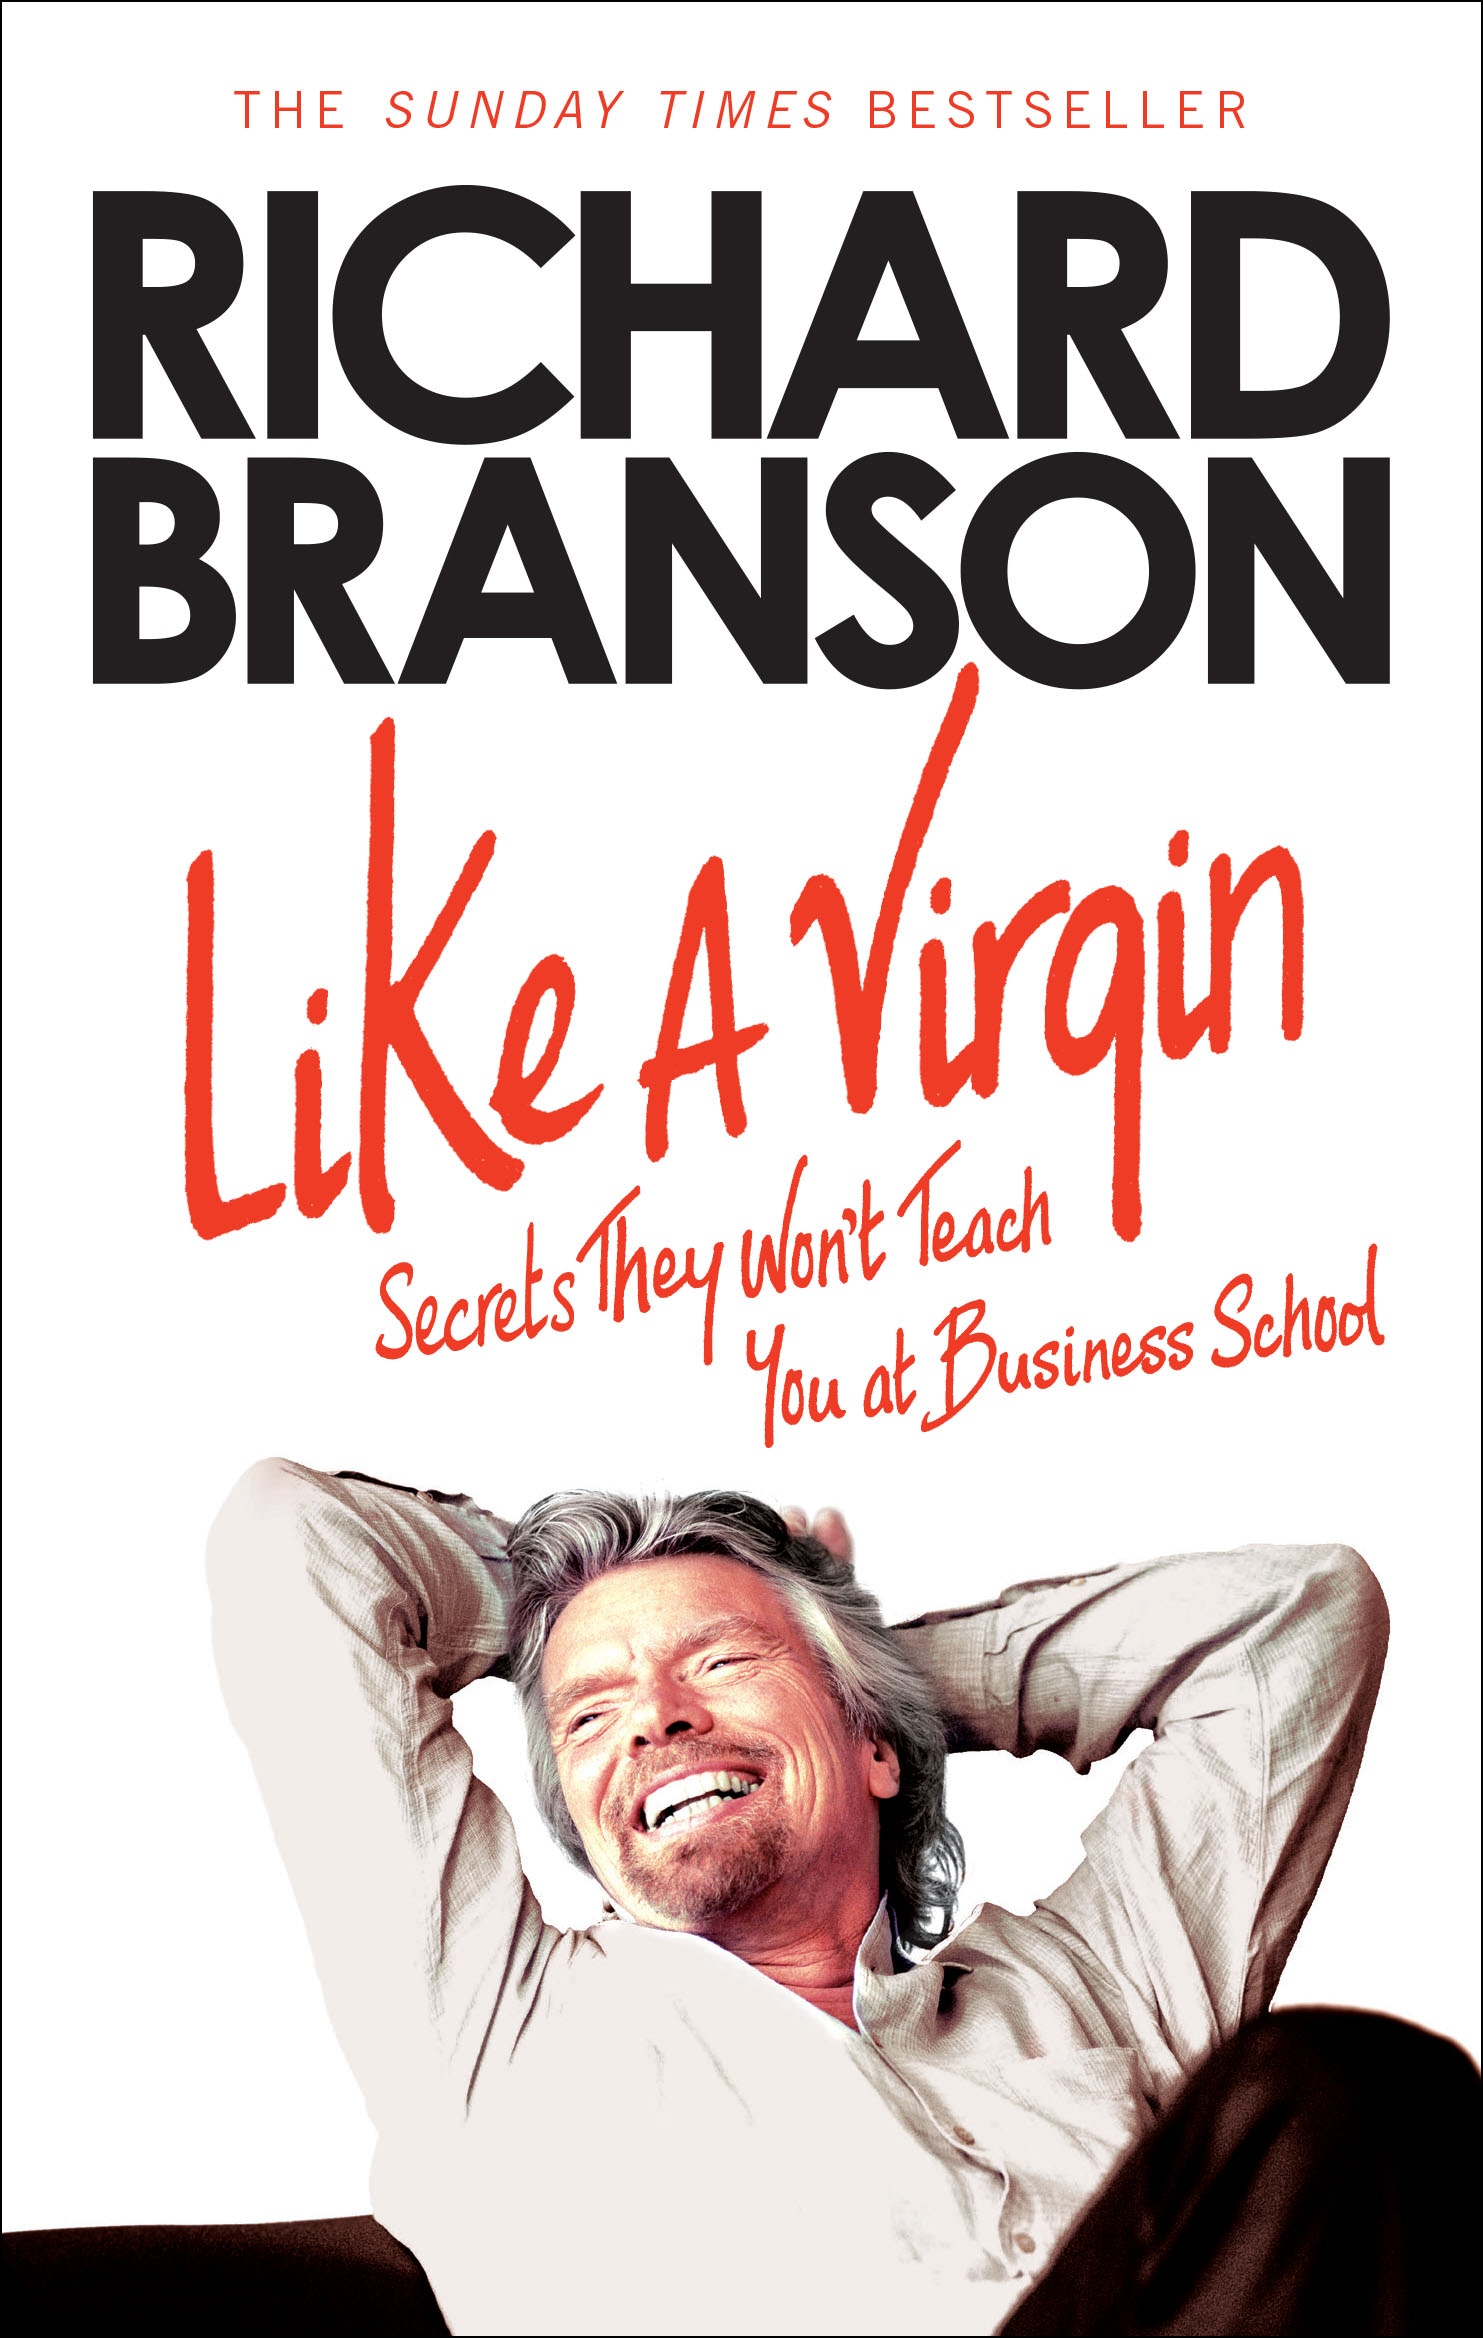 Book “Like A Virgin” by Sir Richard Branson — November 7, 2013